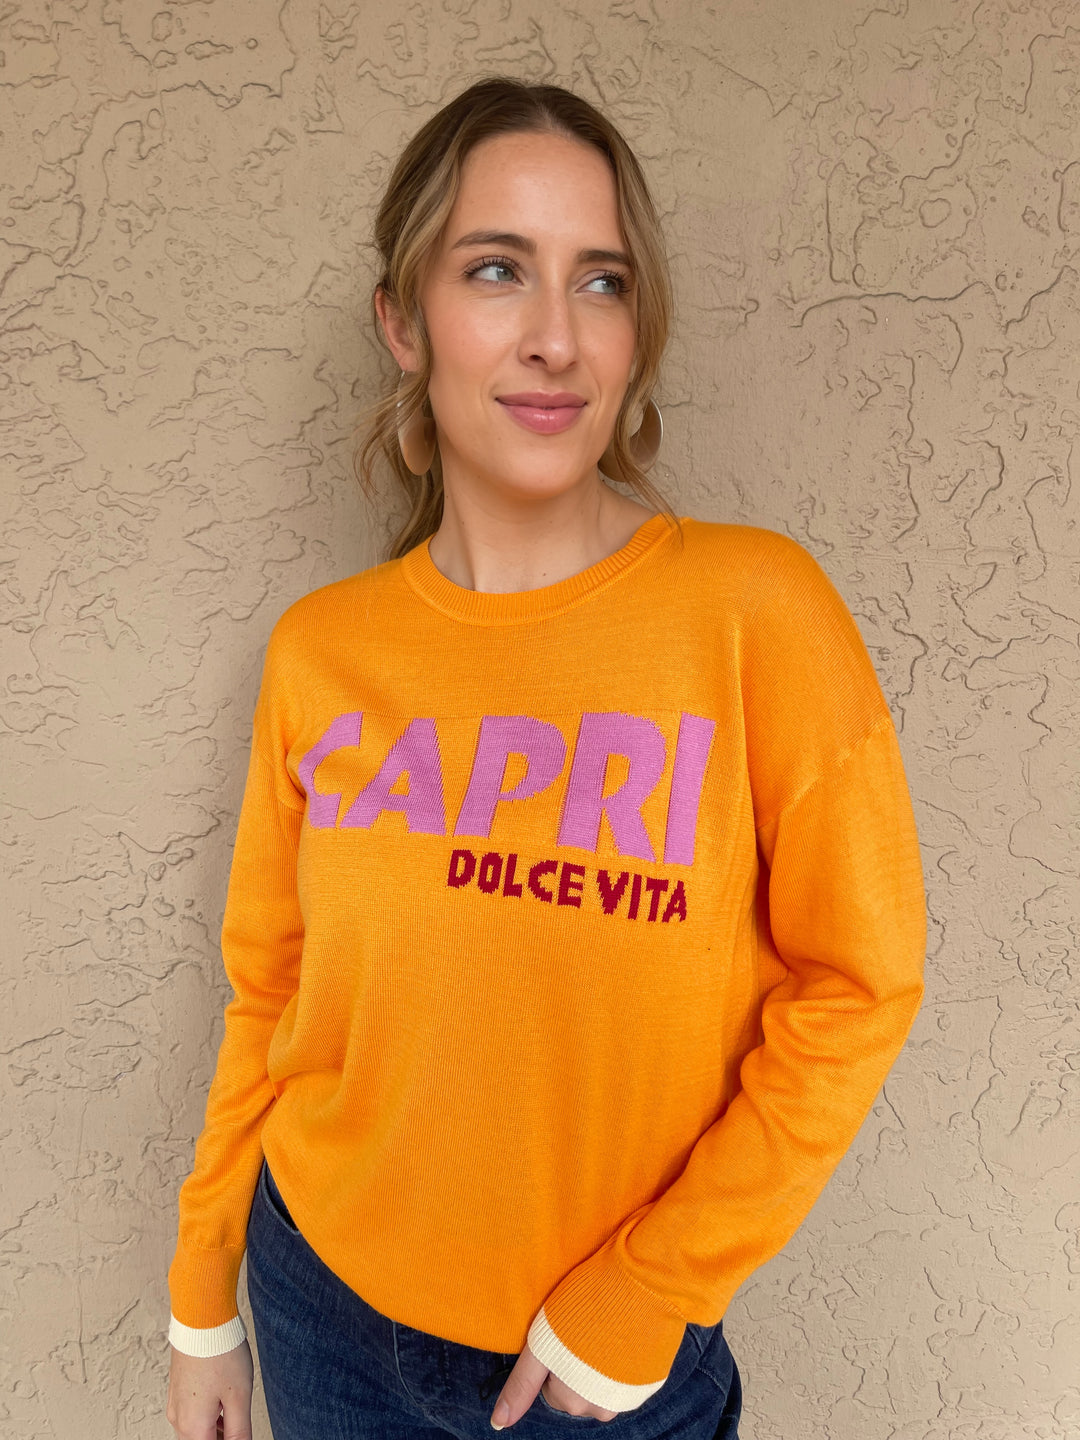 Capri Dolce Vita Crewneck Sweater